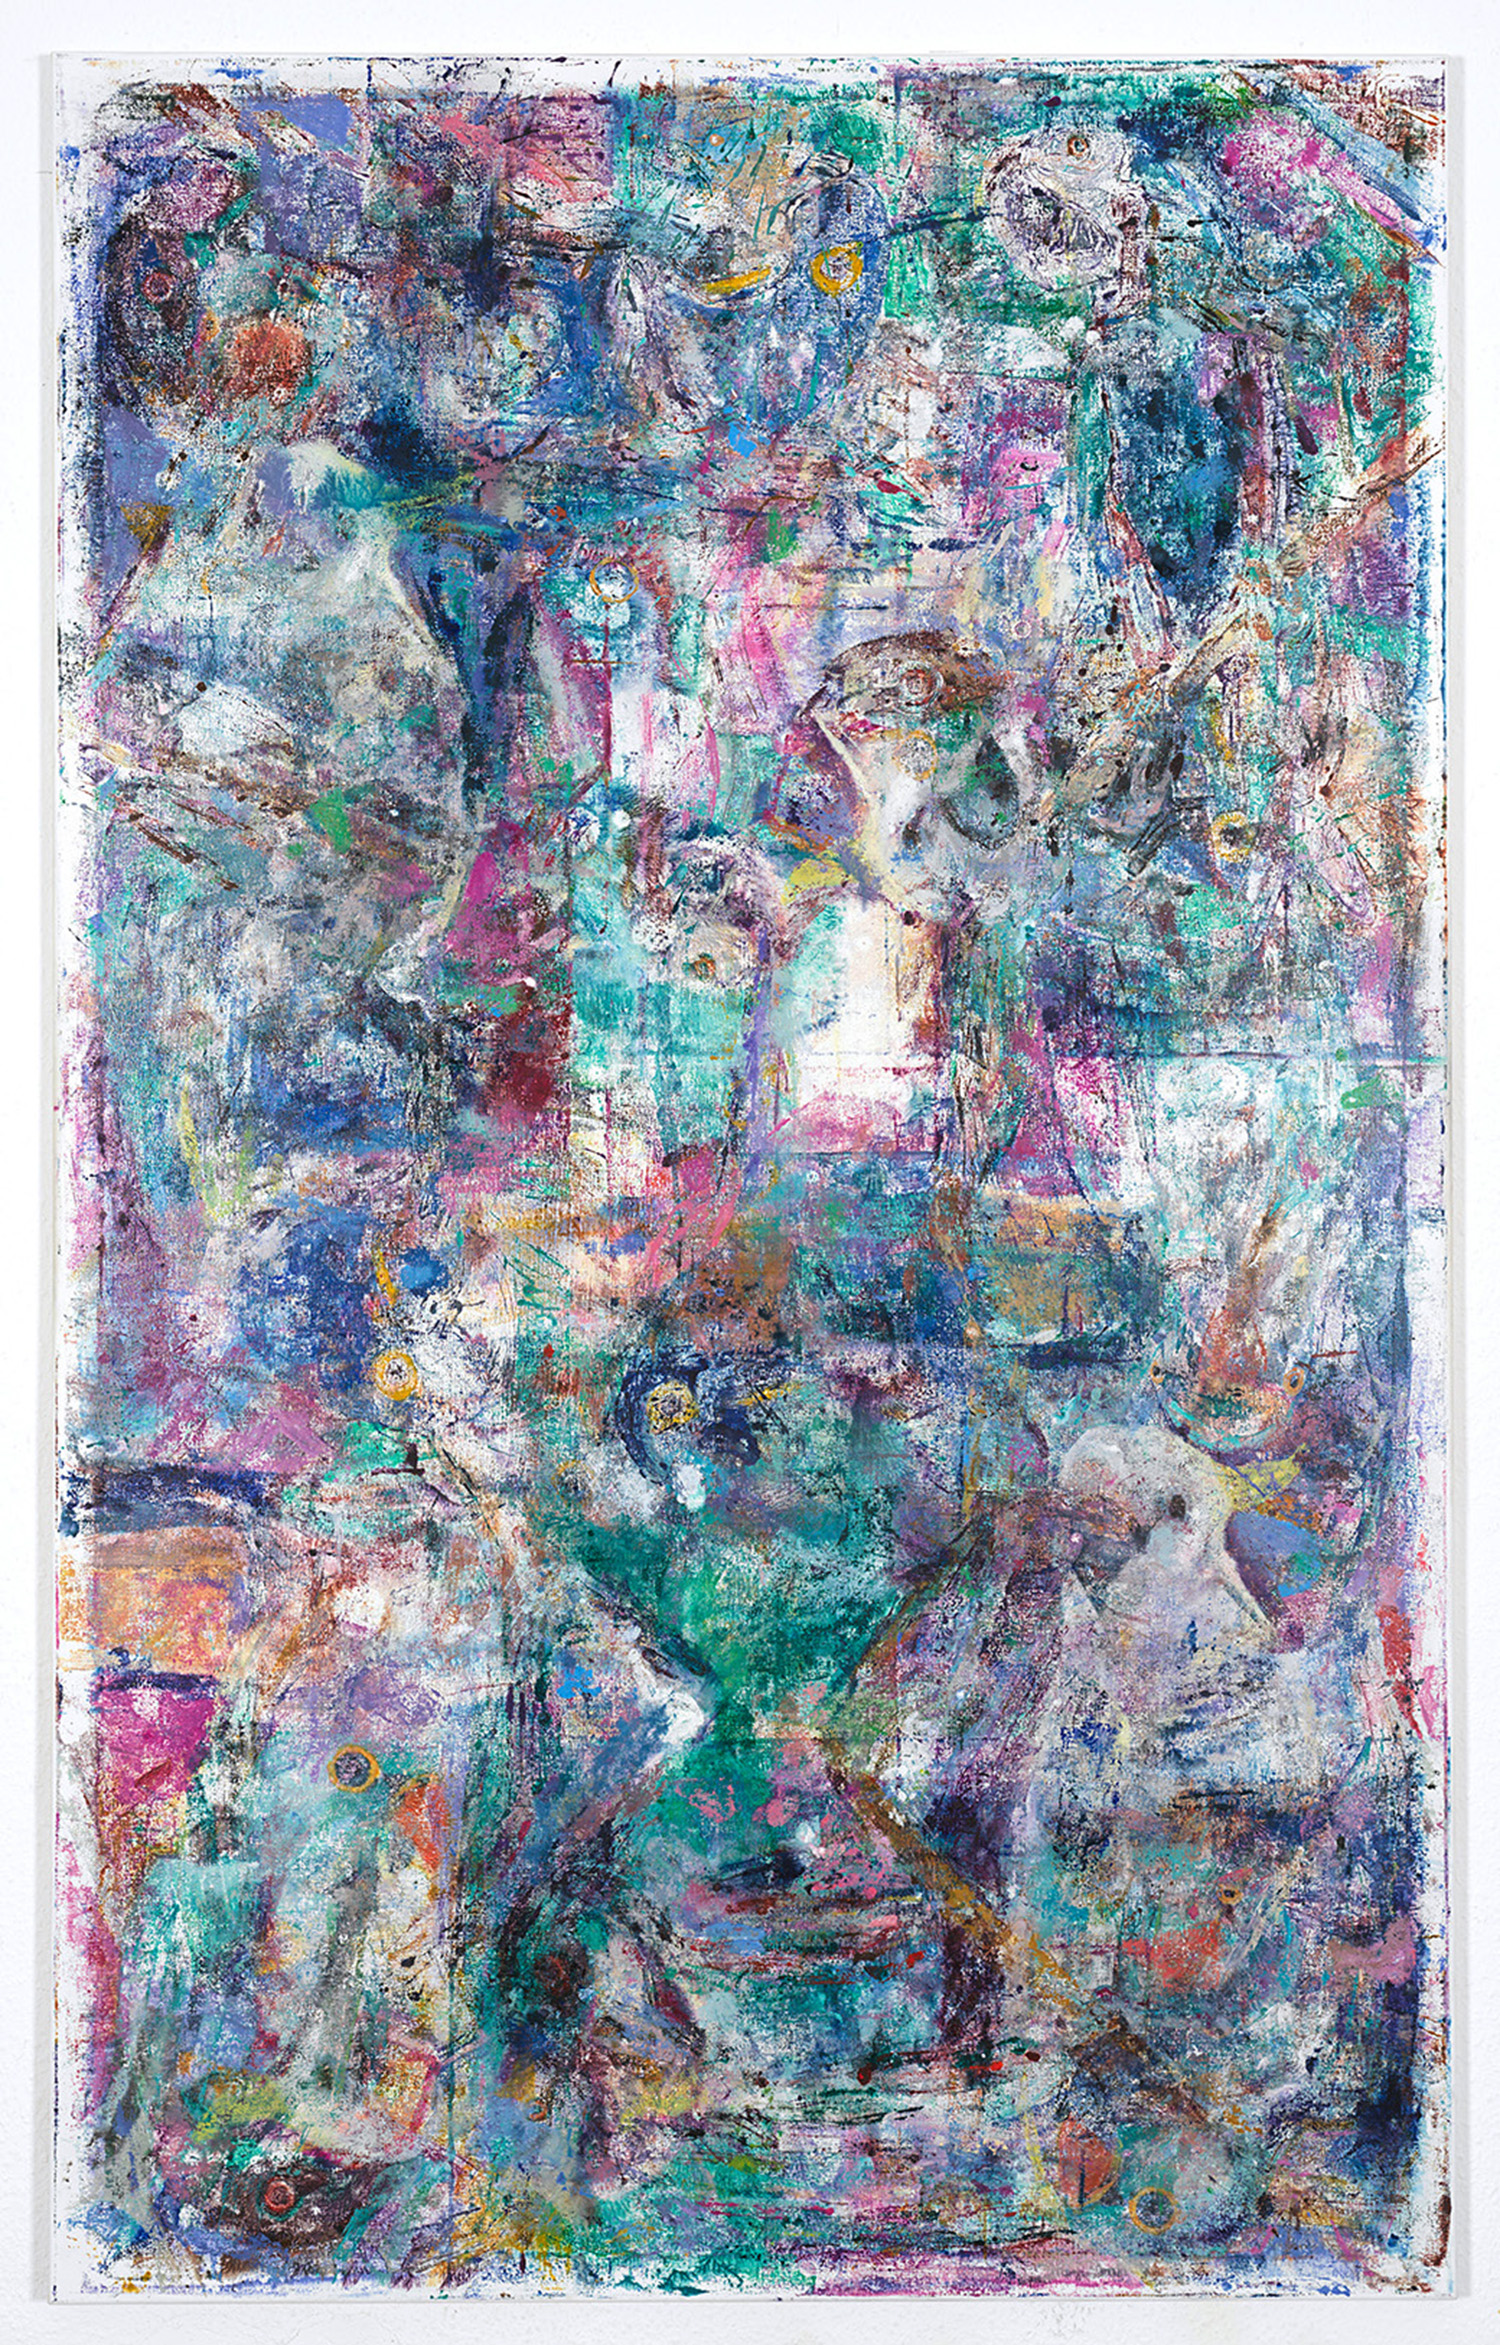  Pierres, 2018  200 x 125 cm. oil on canvas 